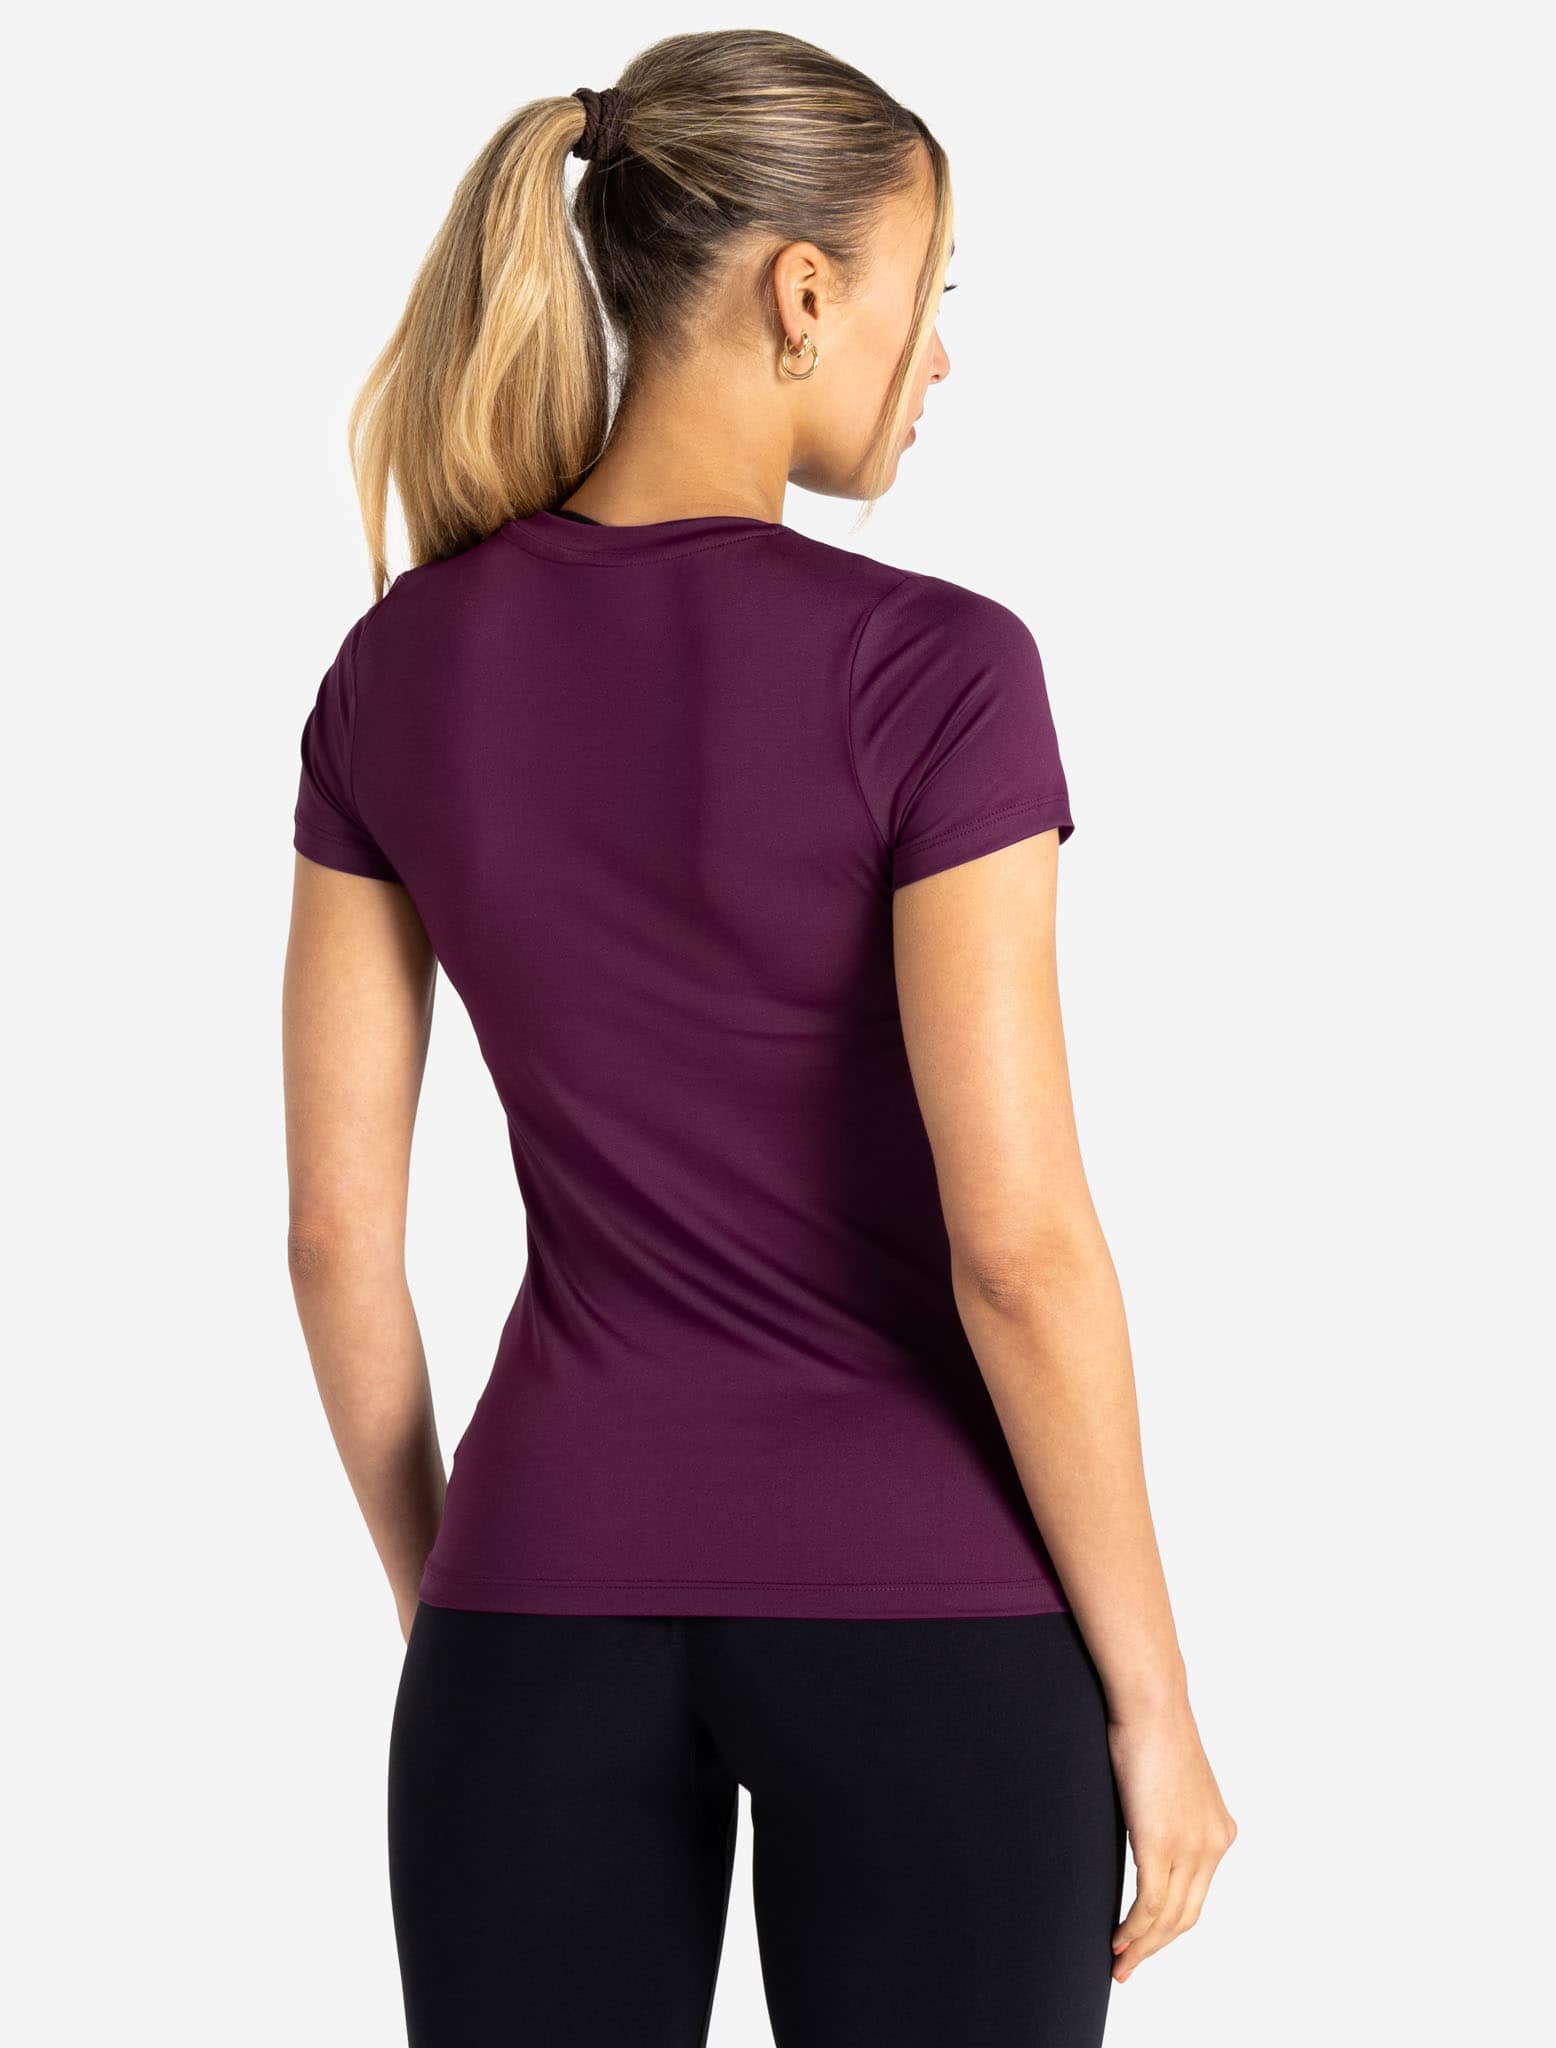 BreathEasy® Full-Length T-Shirt / Purple Pursue Fitness 2